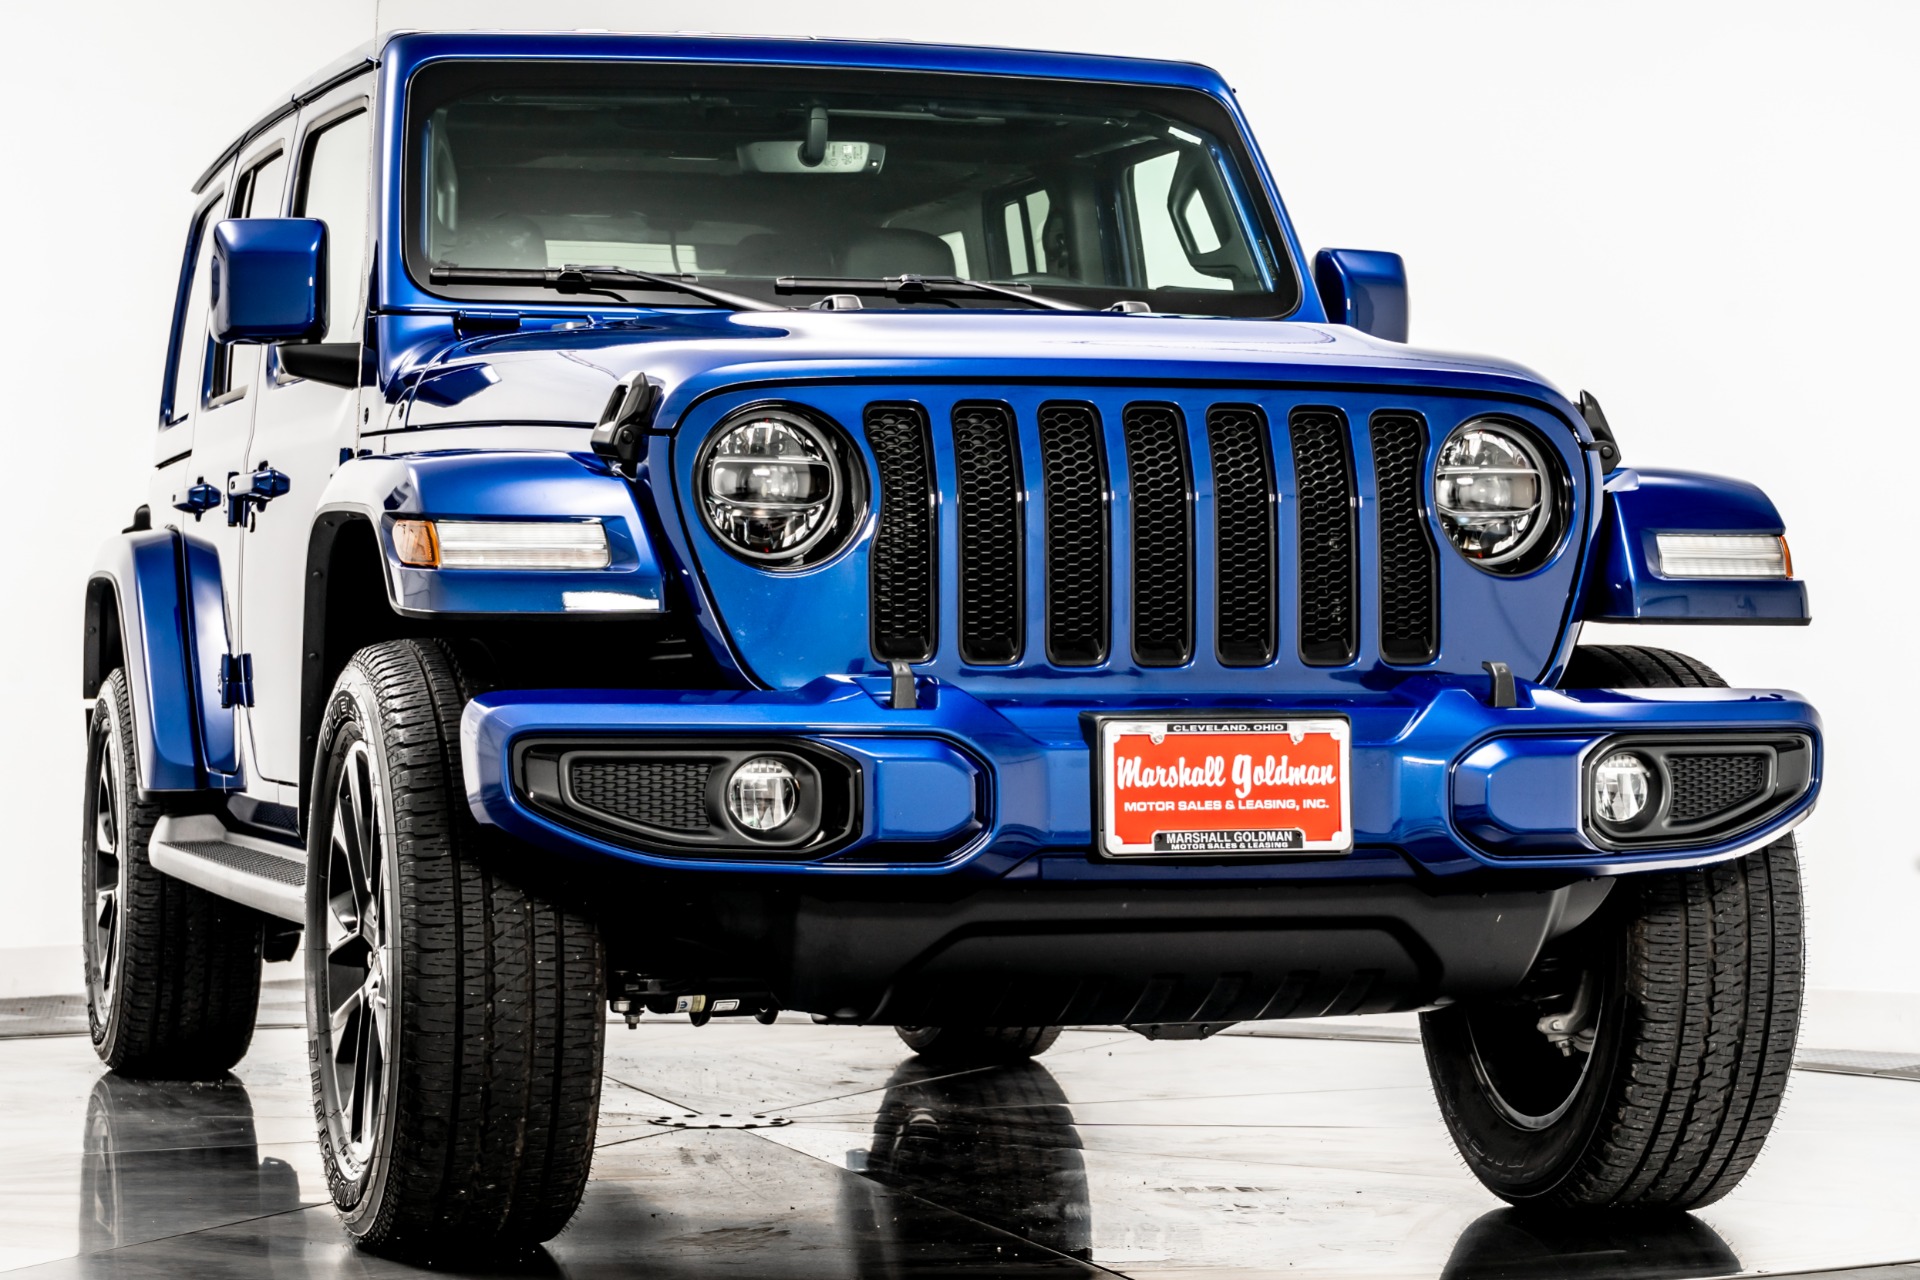 Used 2020 Jeep Wrangler Unlimited Sahara For Sale (Sold) | Marshall Goldman  Cleveland Stock #WJKSBL